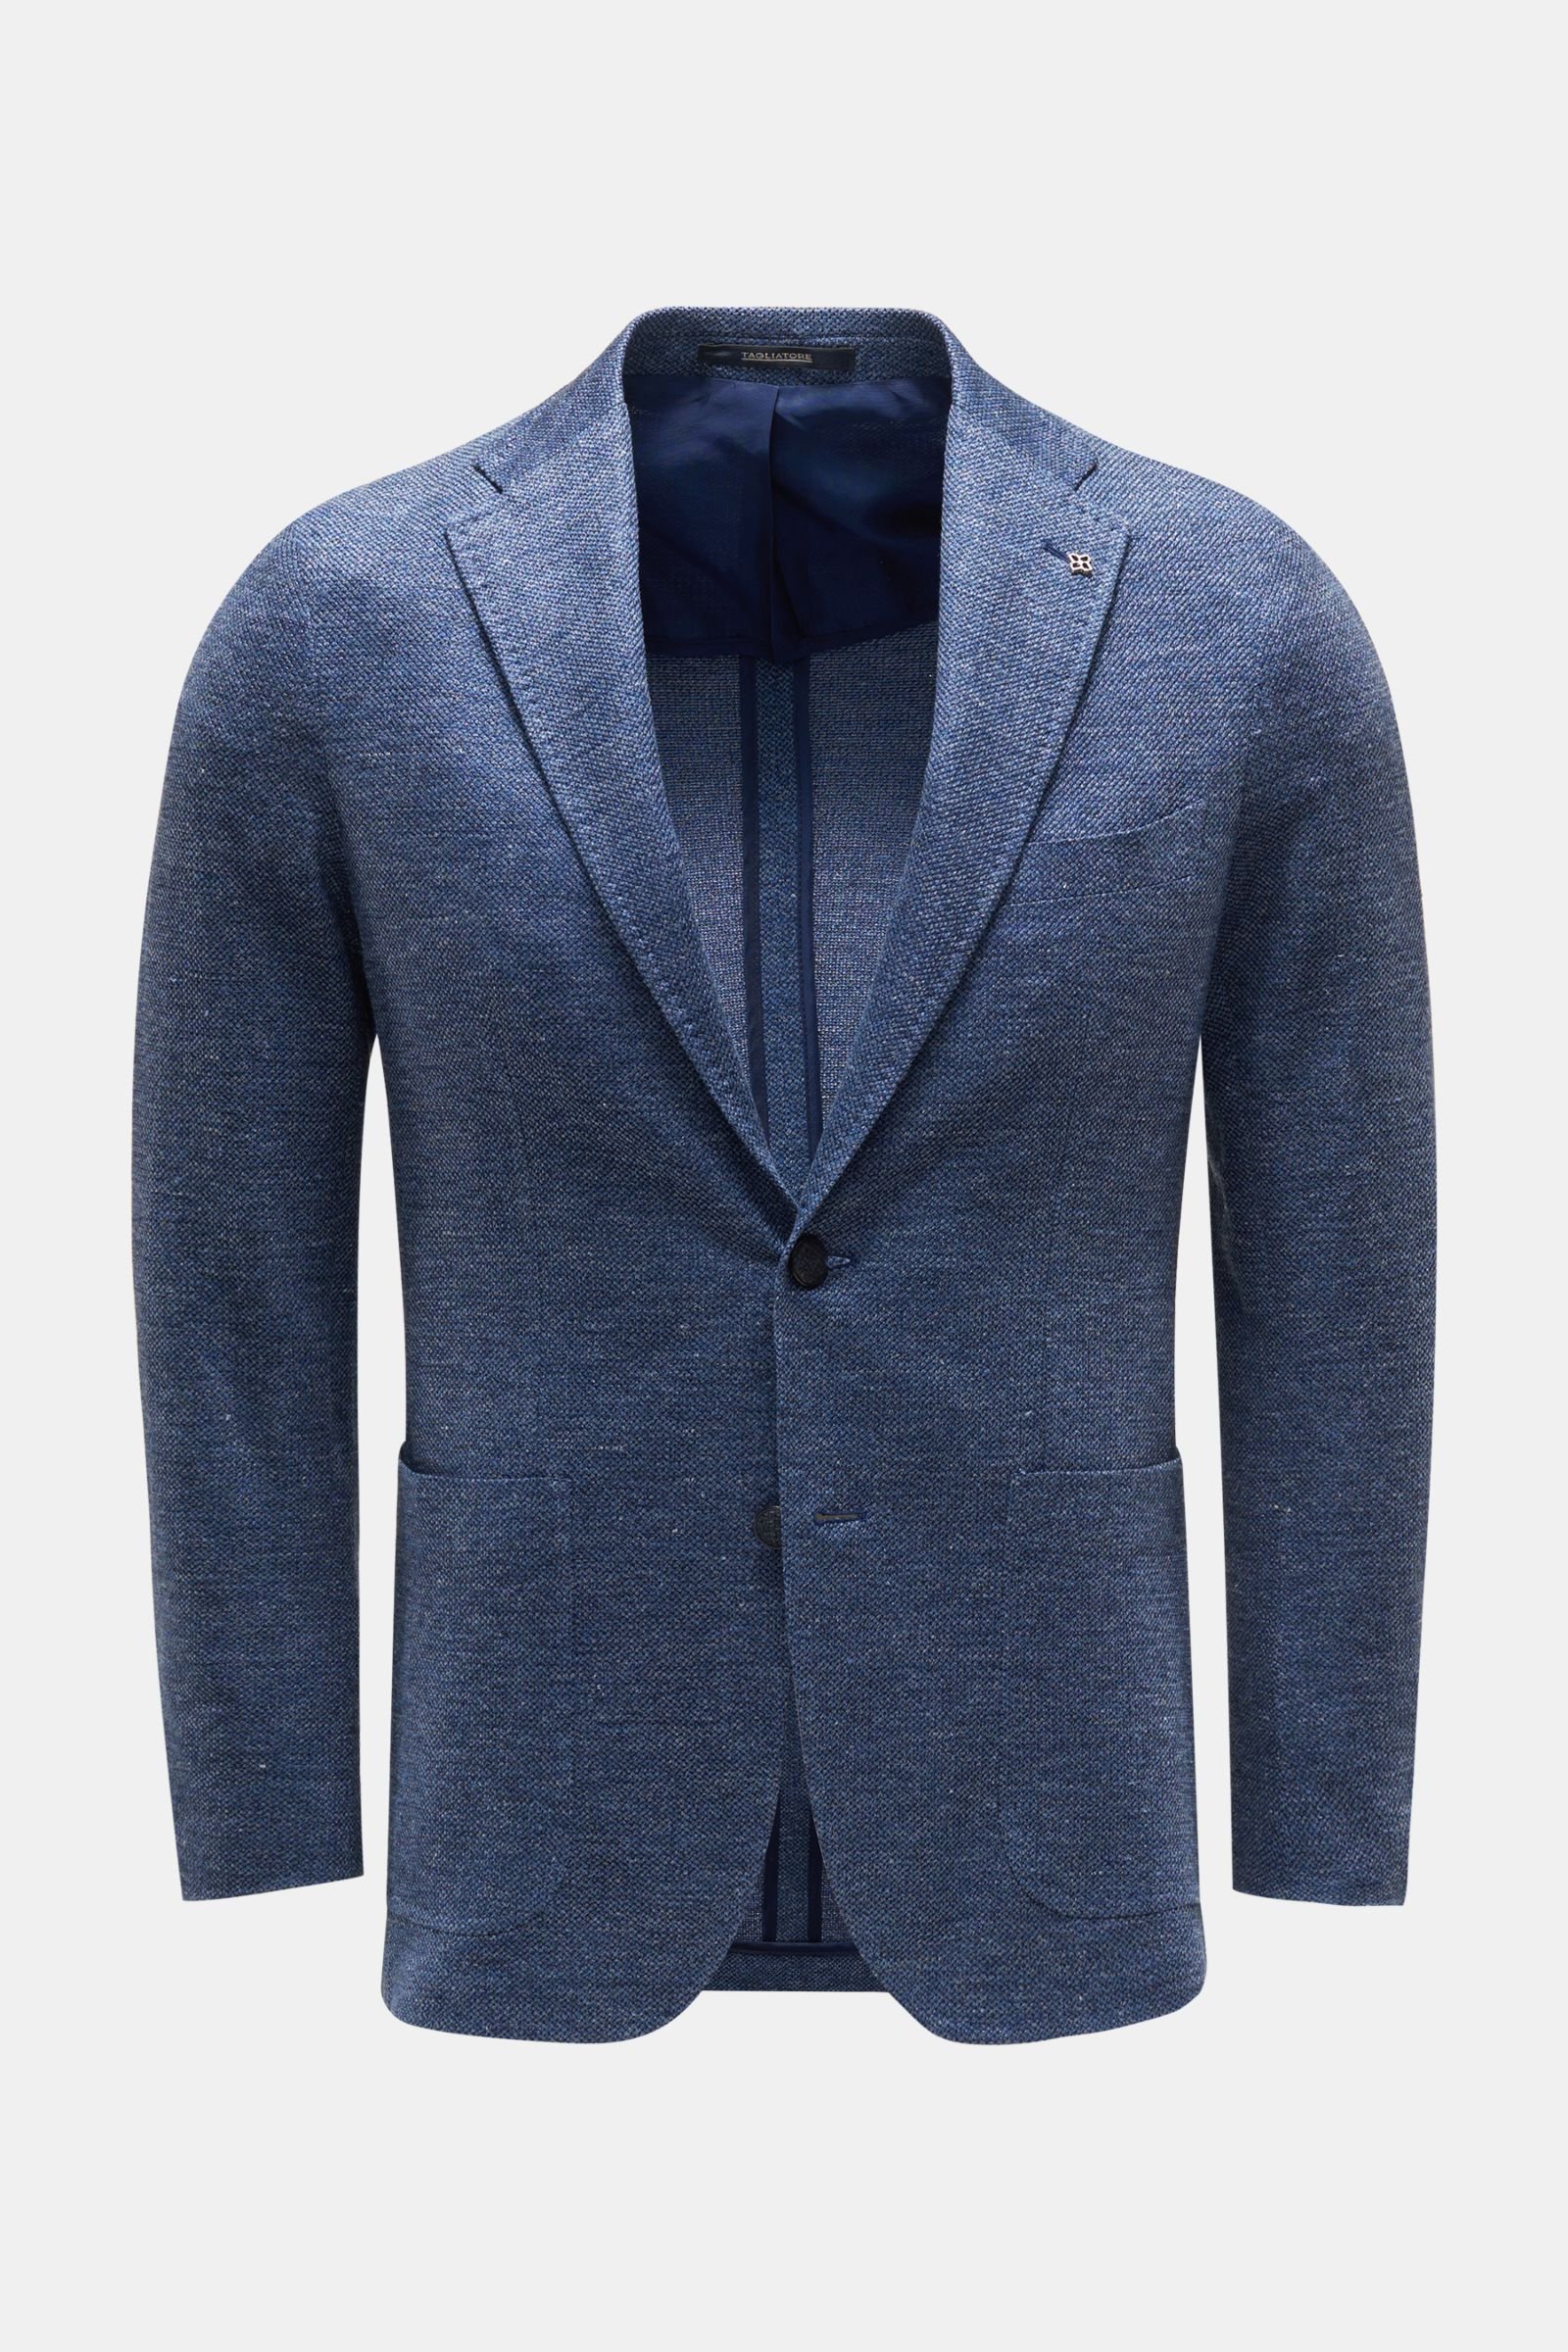 Smart-casual jacket dark blue 